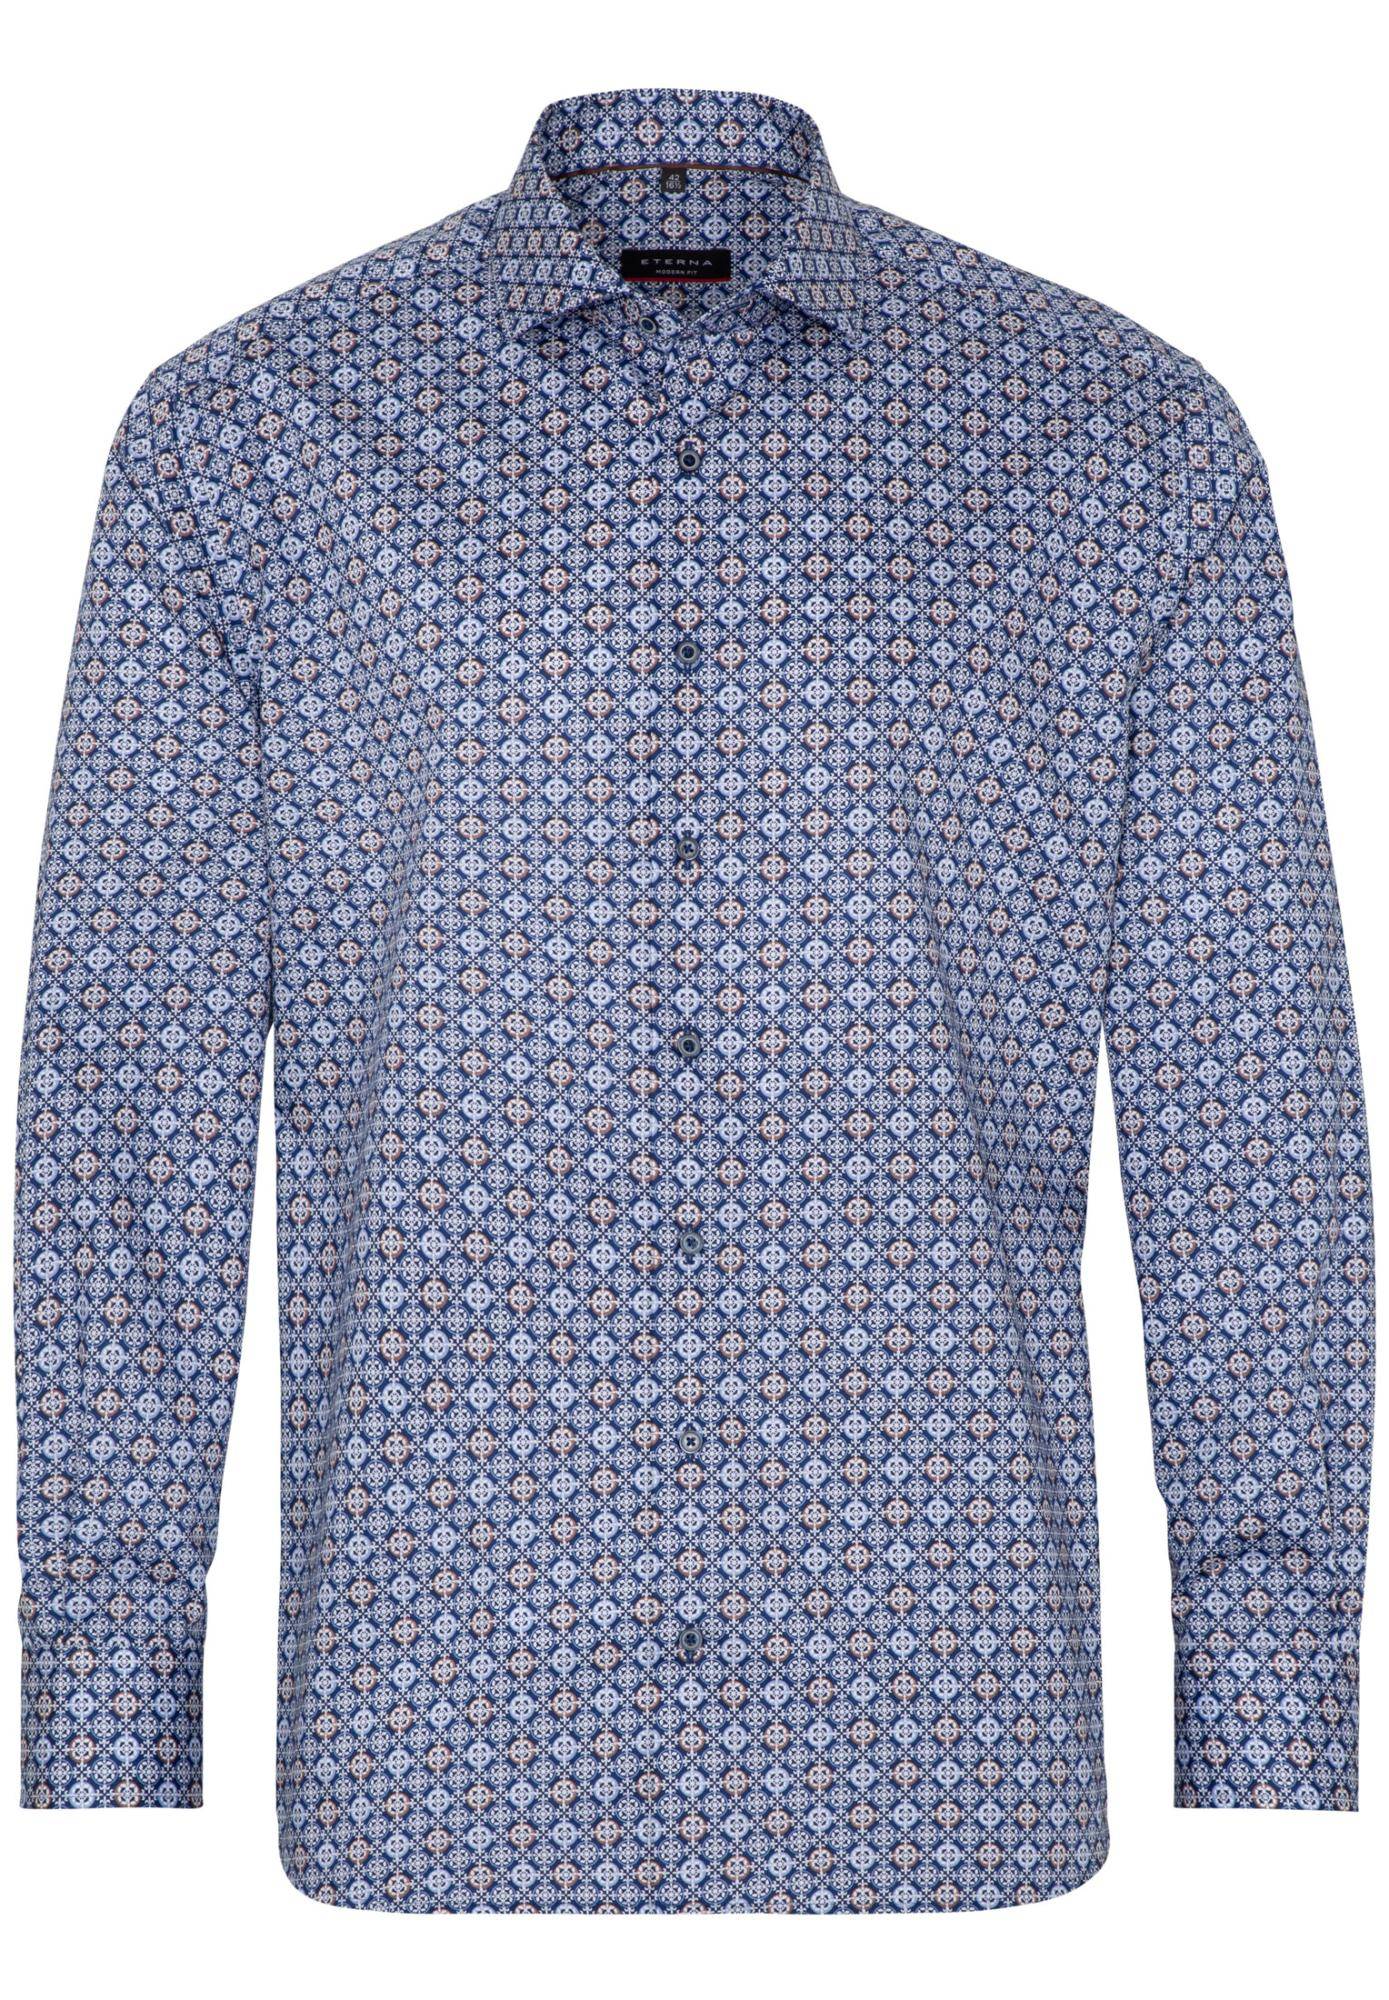 Мужская рубашка ETERNA, синяя, цвет синий, размер 50 - фото 1